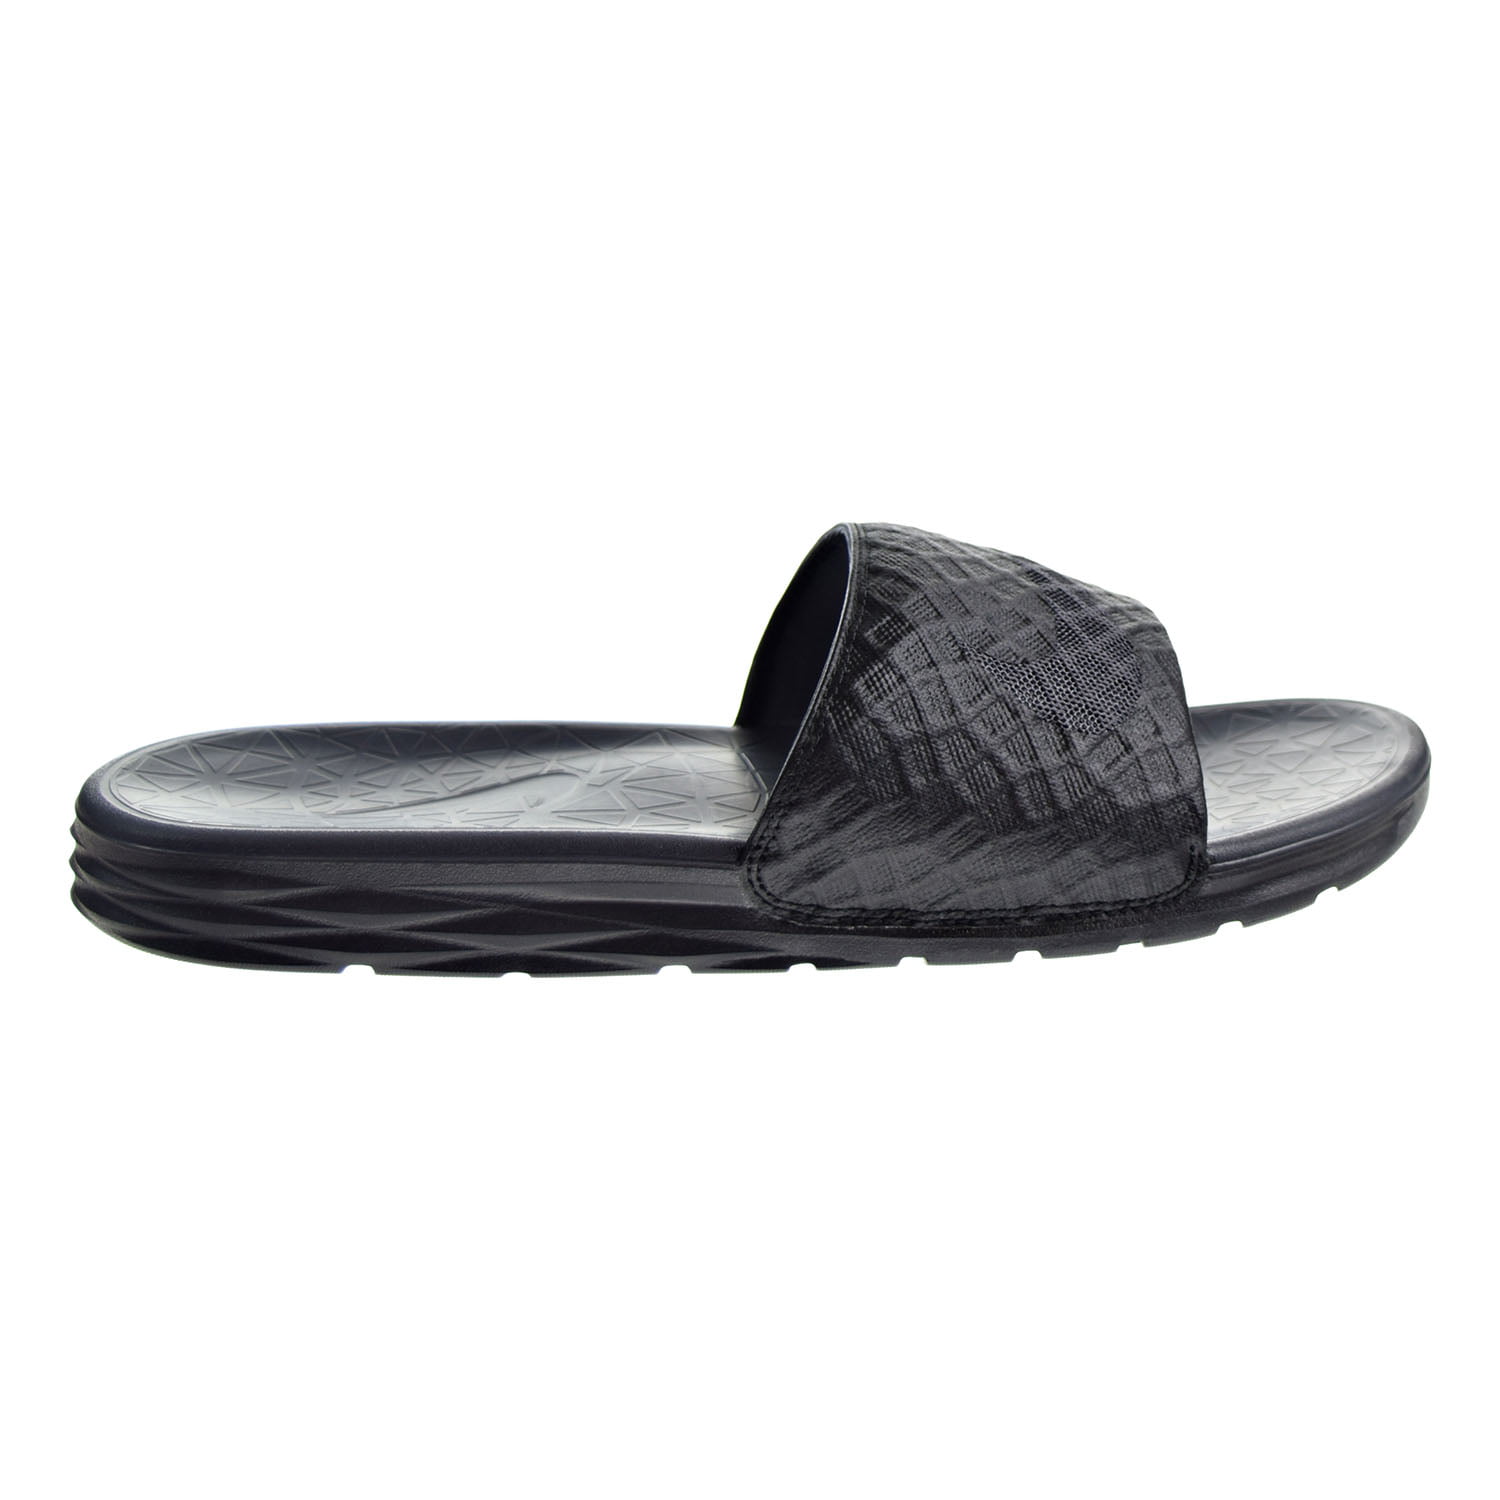 Nike Men's Benassi Solarsoft Sandals Black 705474-091 (7 D(M